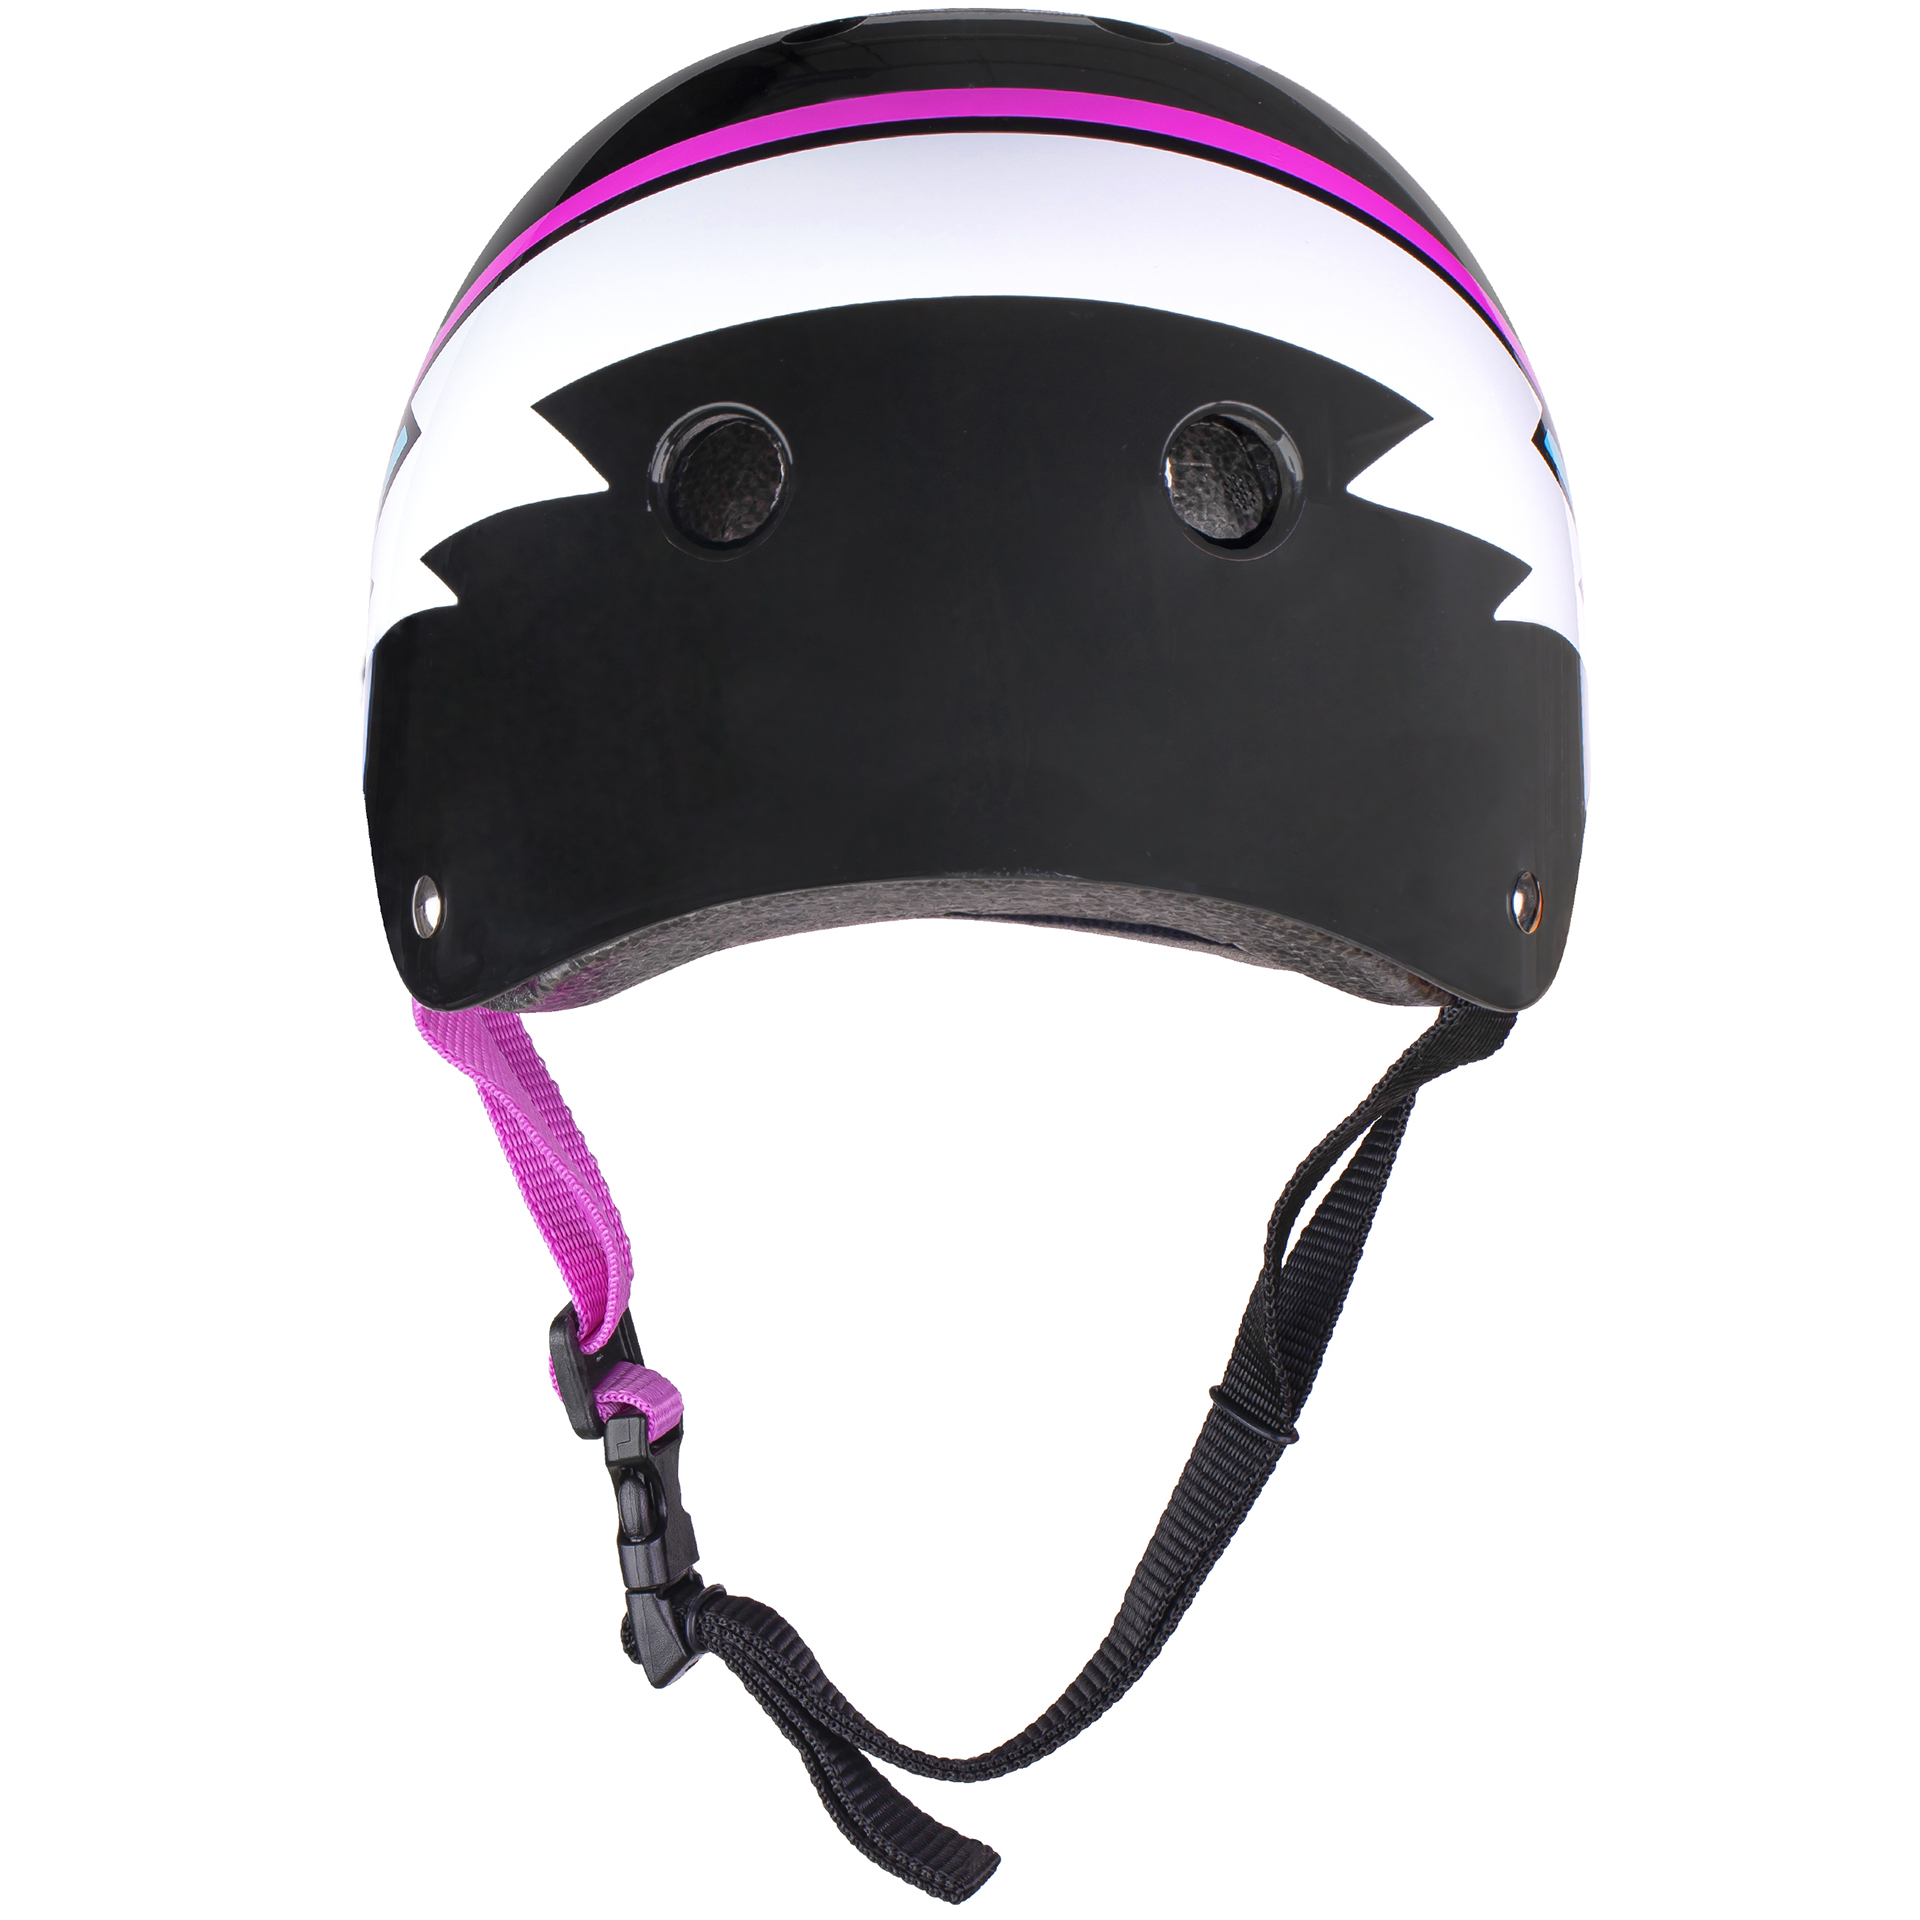 Шлем защитный спортивный WIPEOUT Black Bolt с фломастерами и трафаретами размер M 5+ обхват 49-52 см - фото 5